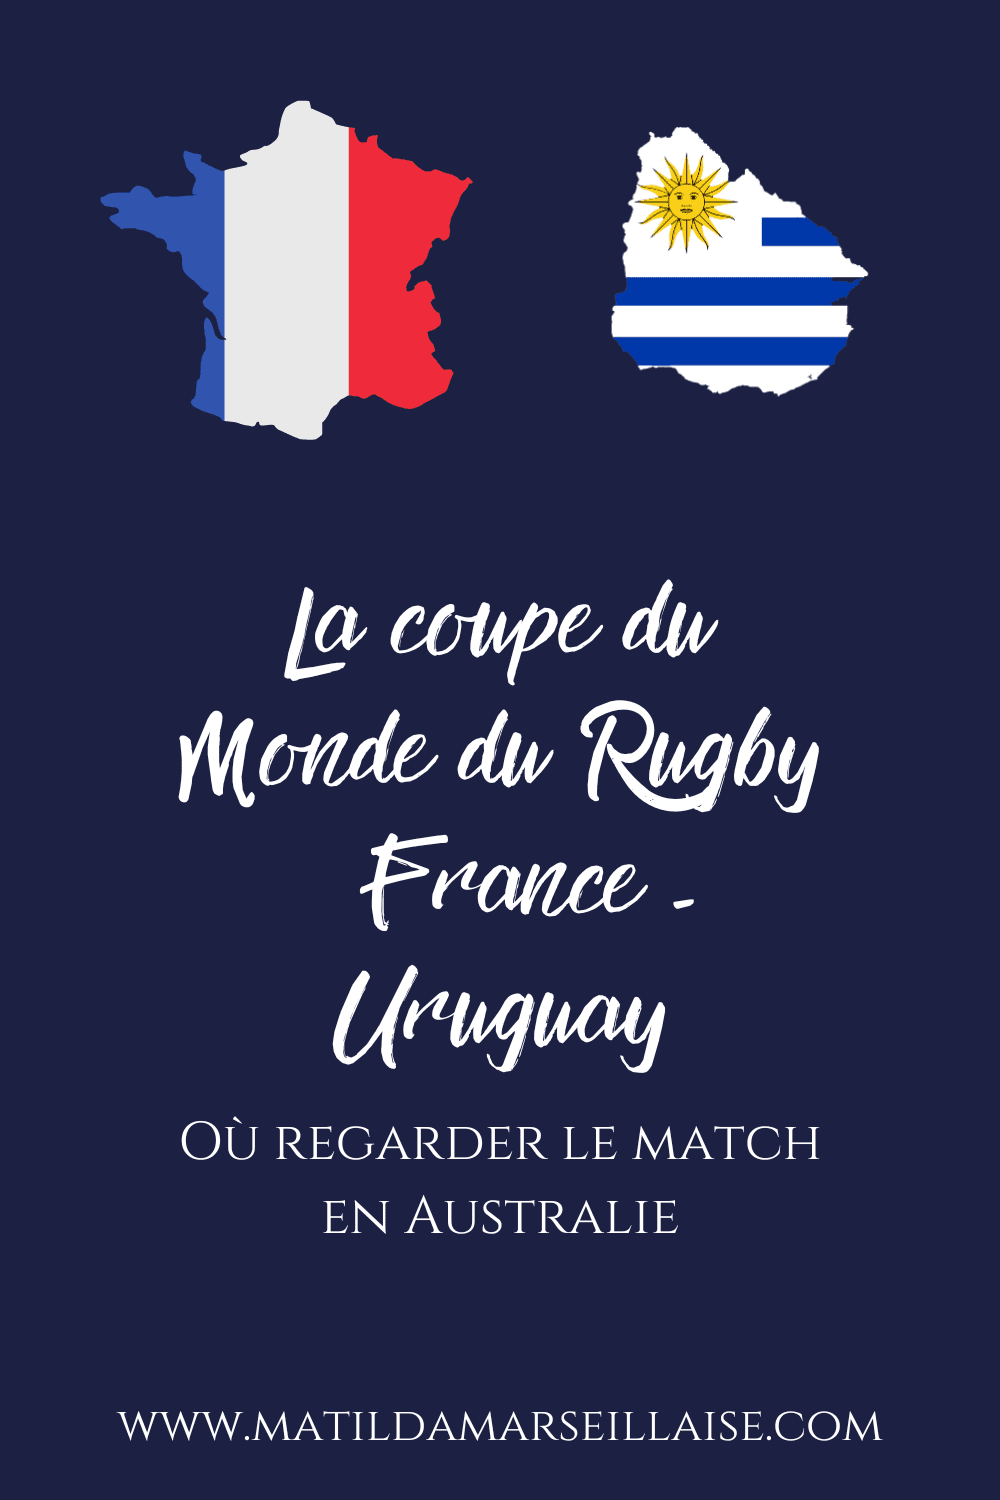 Où regarder France – Uruguay en Australie demain